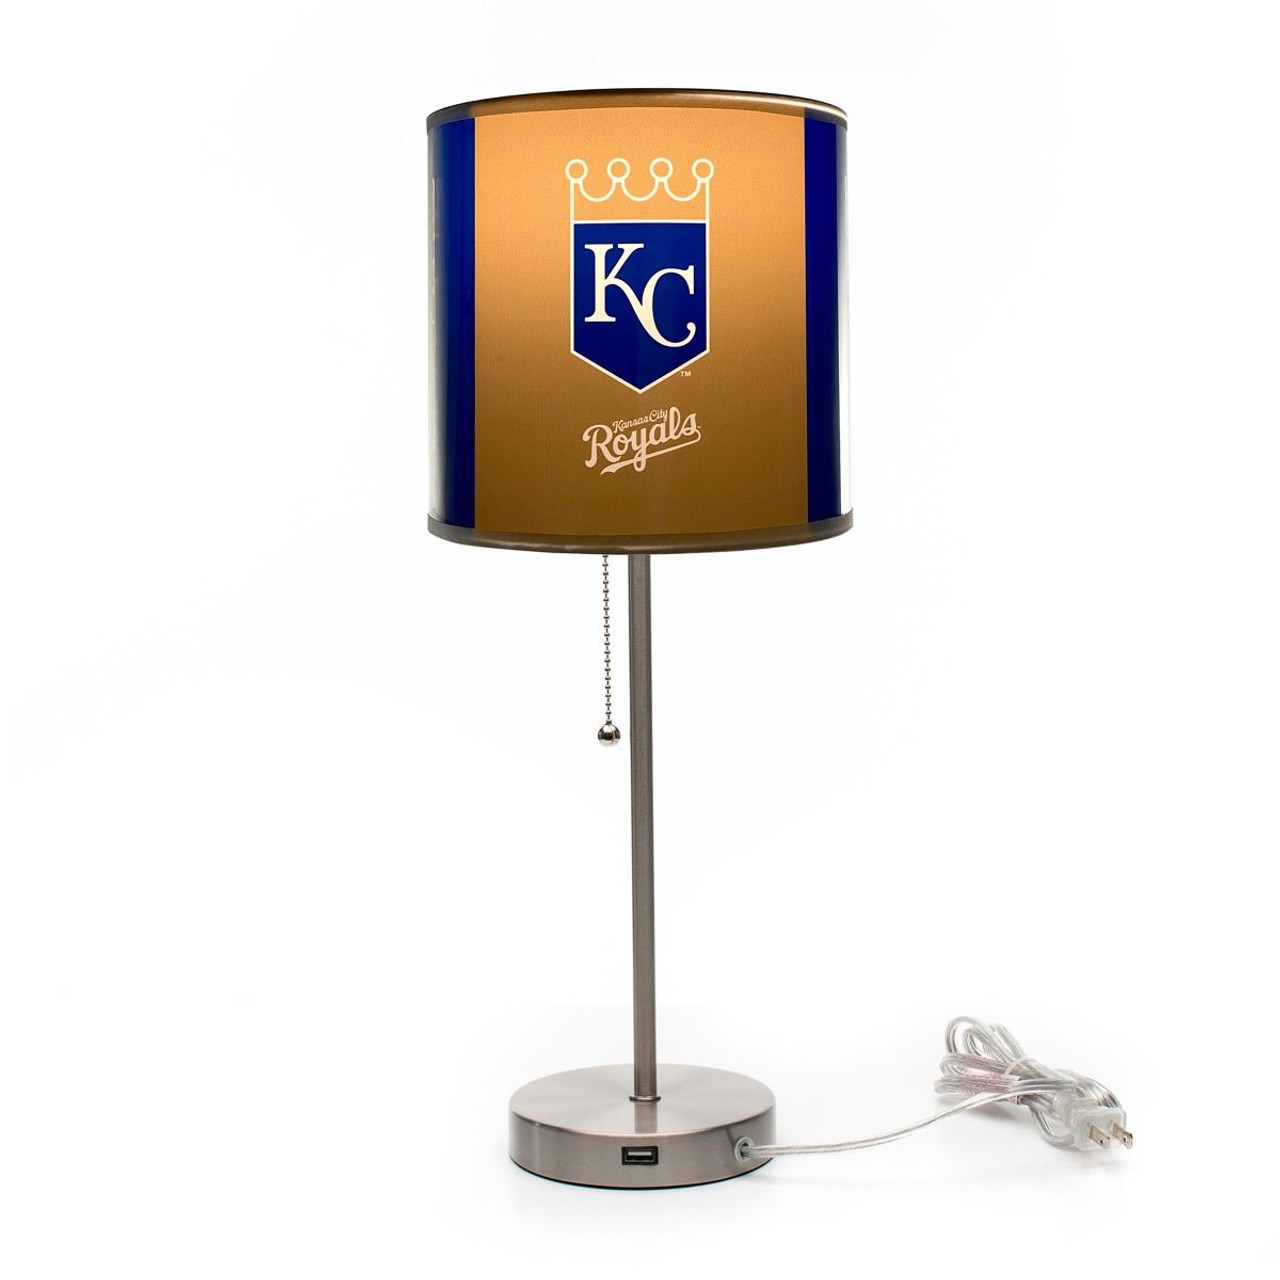 KCR, KC, Kansas City, Royals, KS, Chrome,19", Lamp, USB, Desk, Table, MLB, Imperial, 720801008592